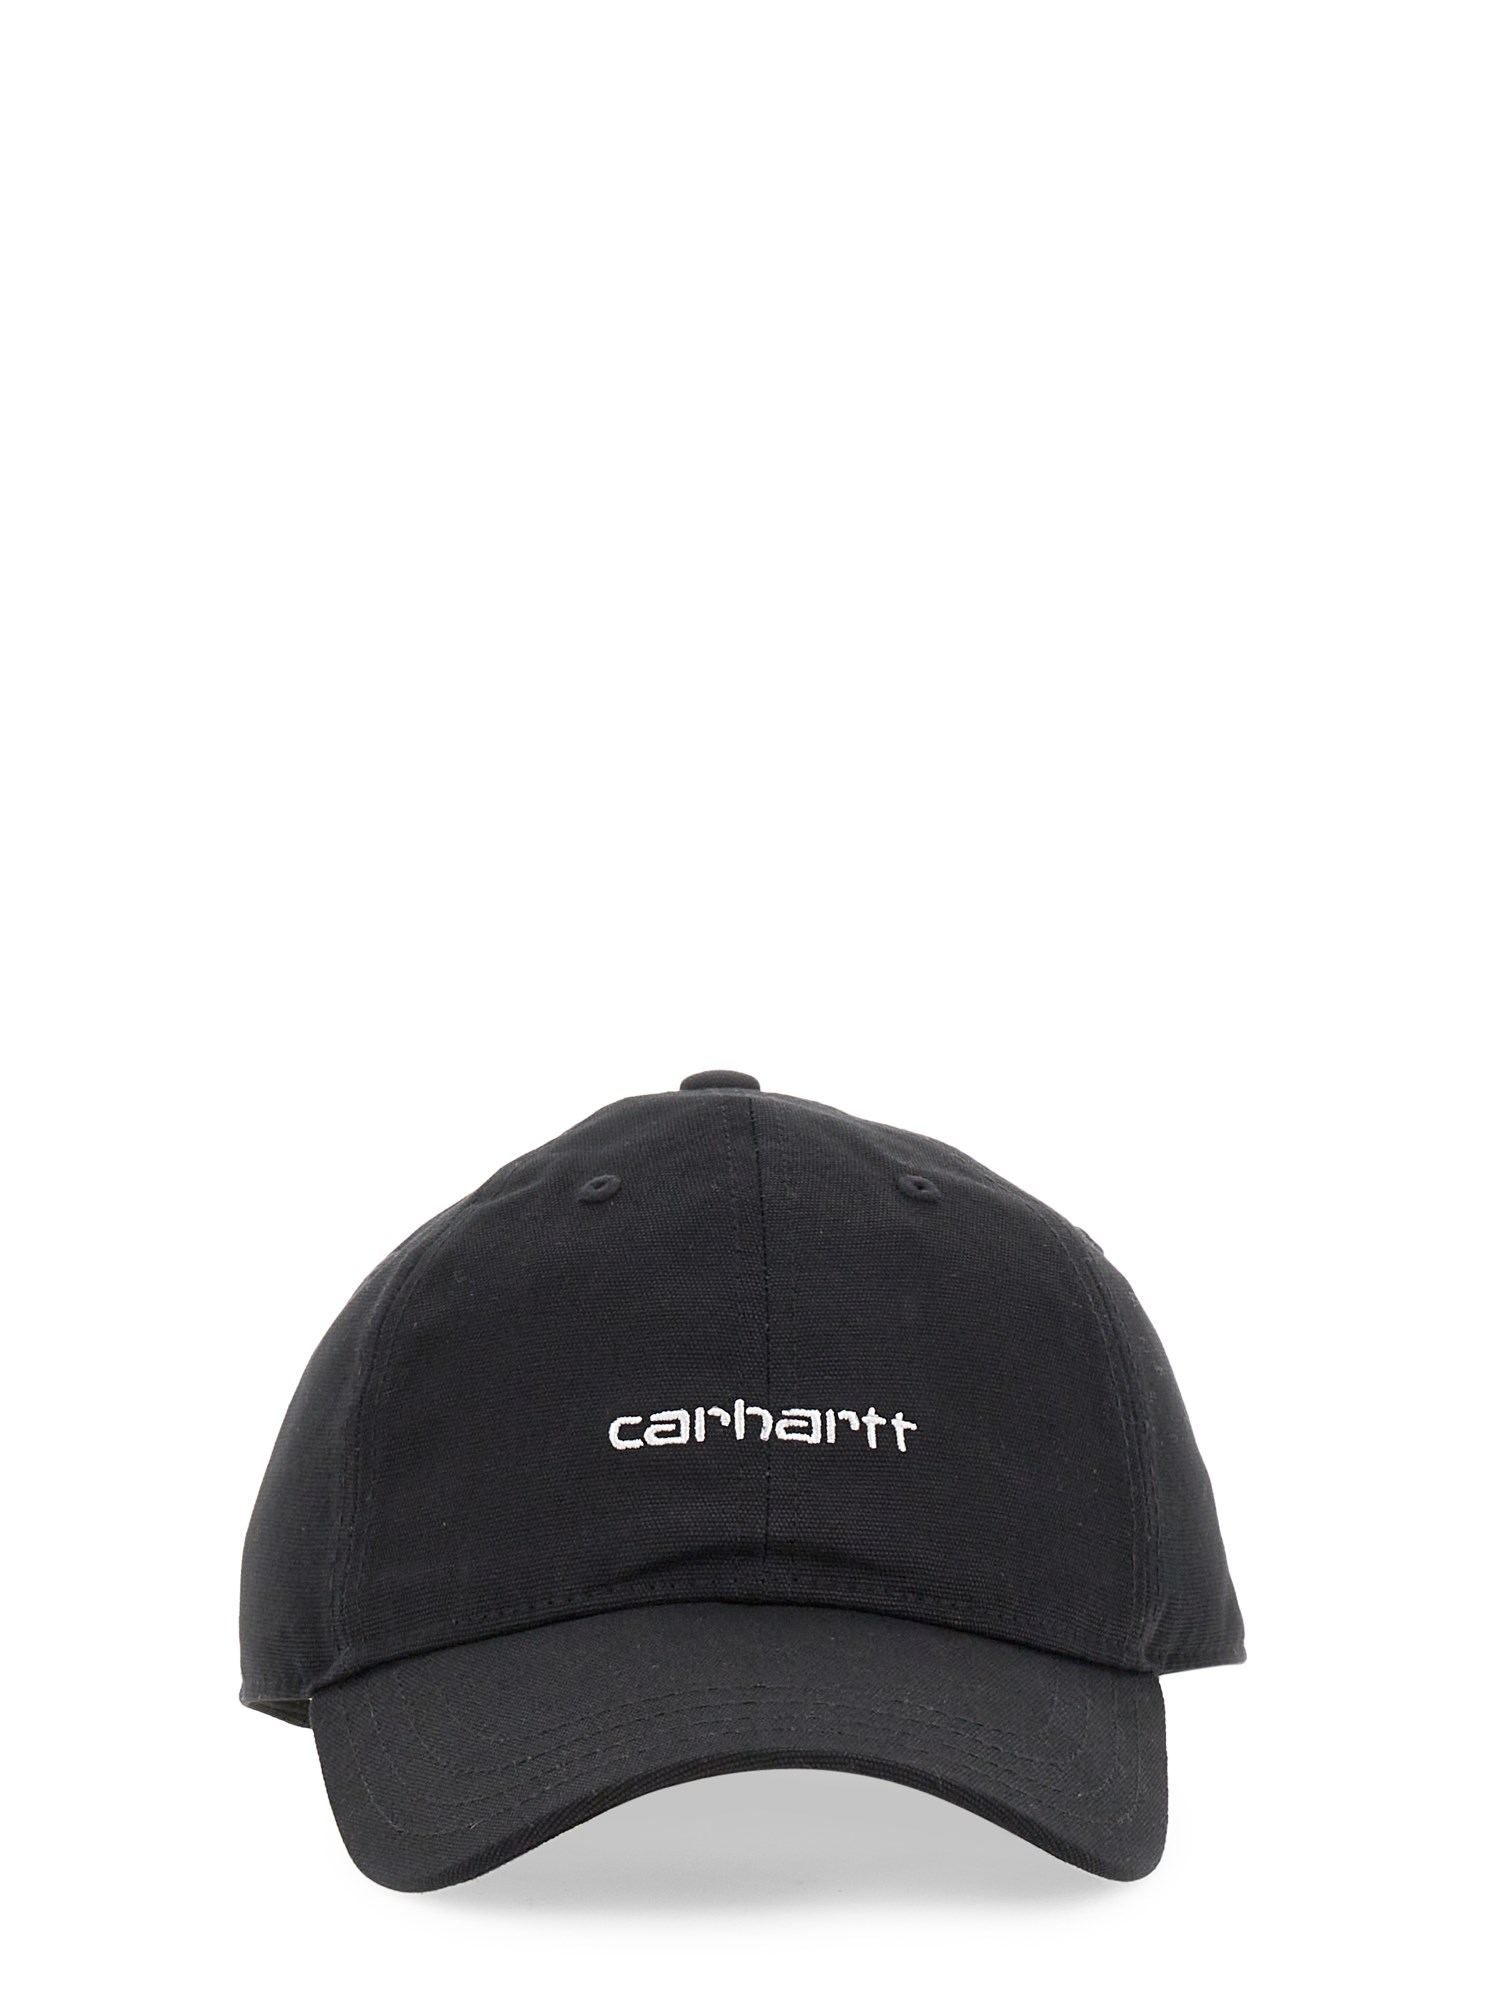 carhartt wip logo embroidery baseball hat